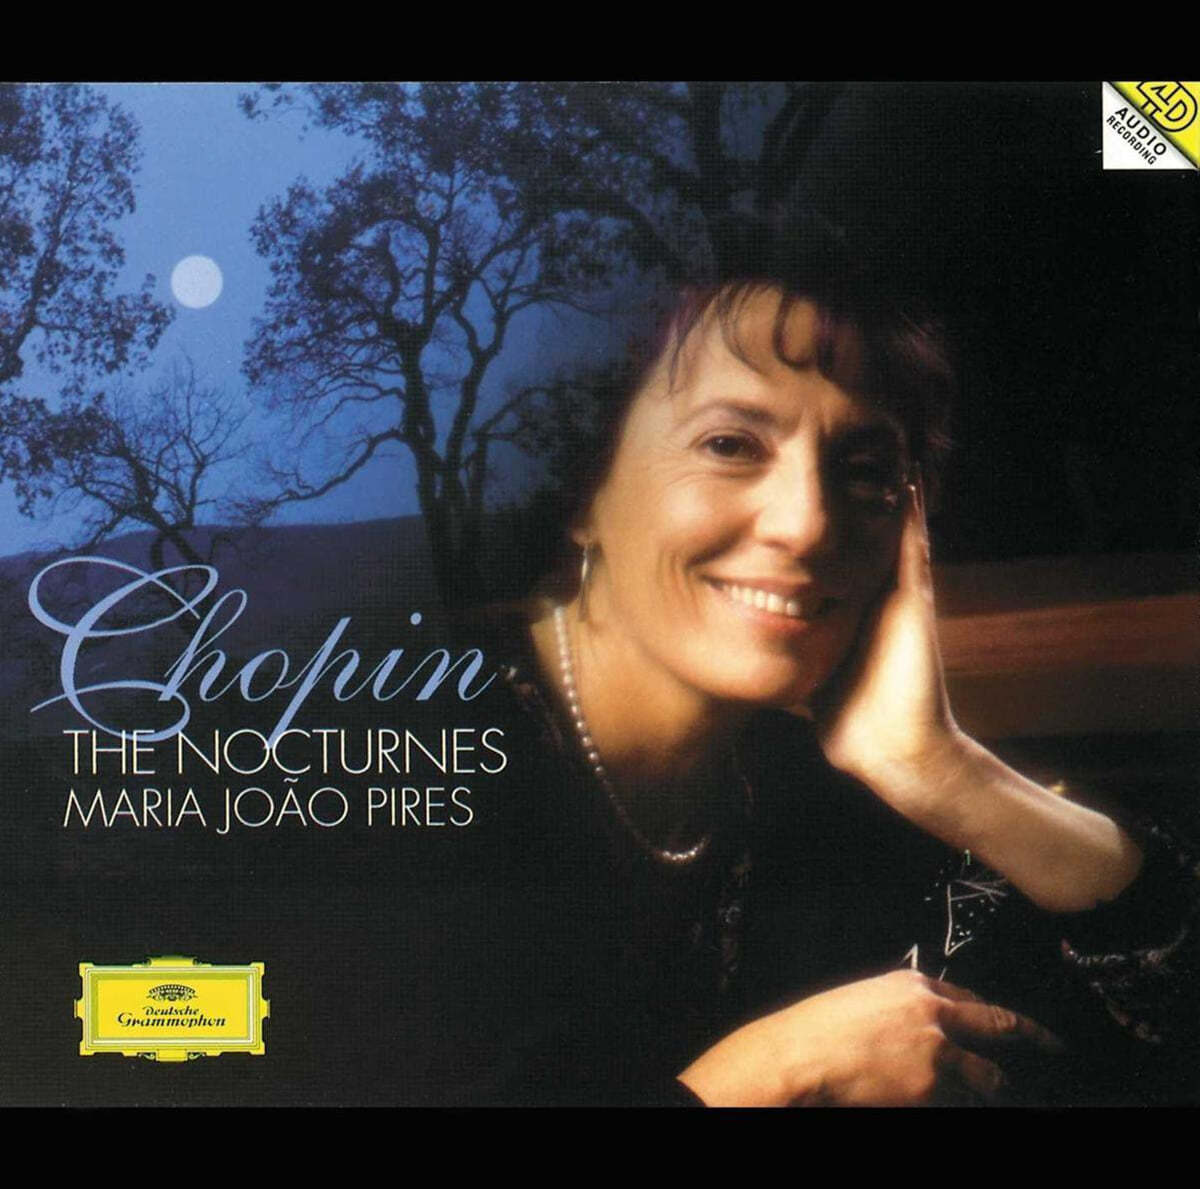 Maria Joao Pires 쇼팽: 녹턴 - 마리아 주앙 피레스 (Chopin: The Nocturnes)